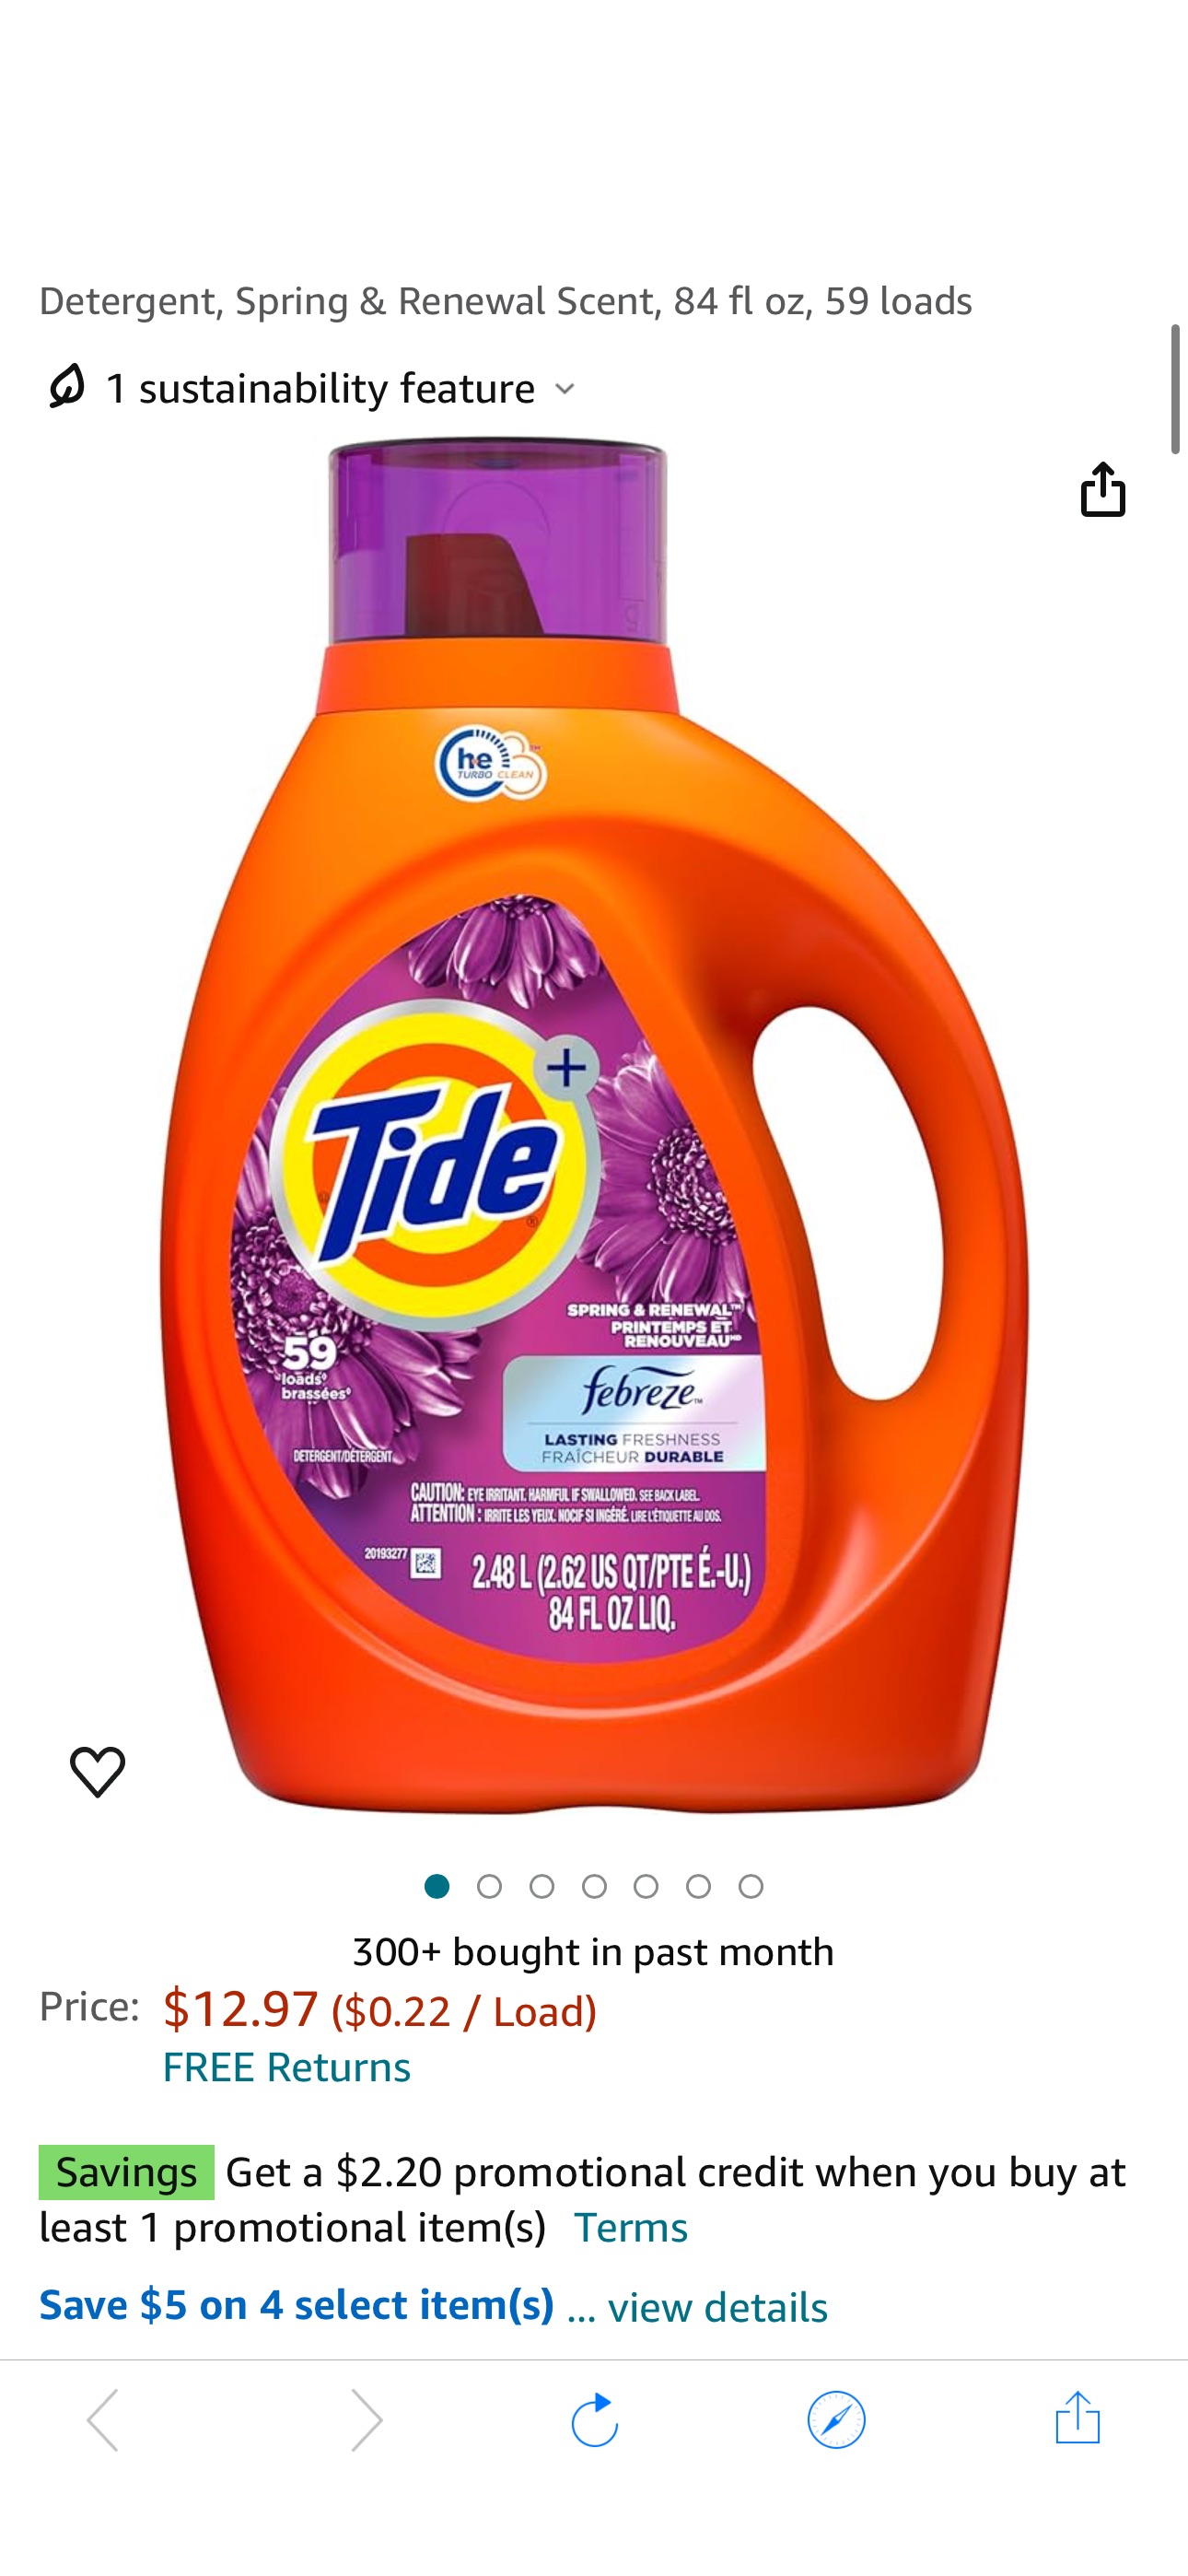 Amazon.com: Tide Plus Febreze Freshness HE Turbo Clean Liquid Laundry Detergent, Spring & Renewal Scent, 84 fl oz, 59 loads : Health & Household